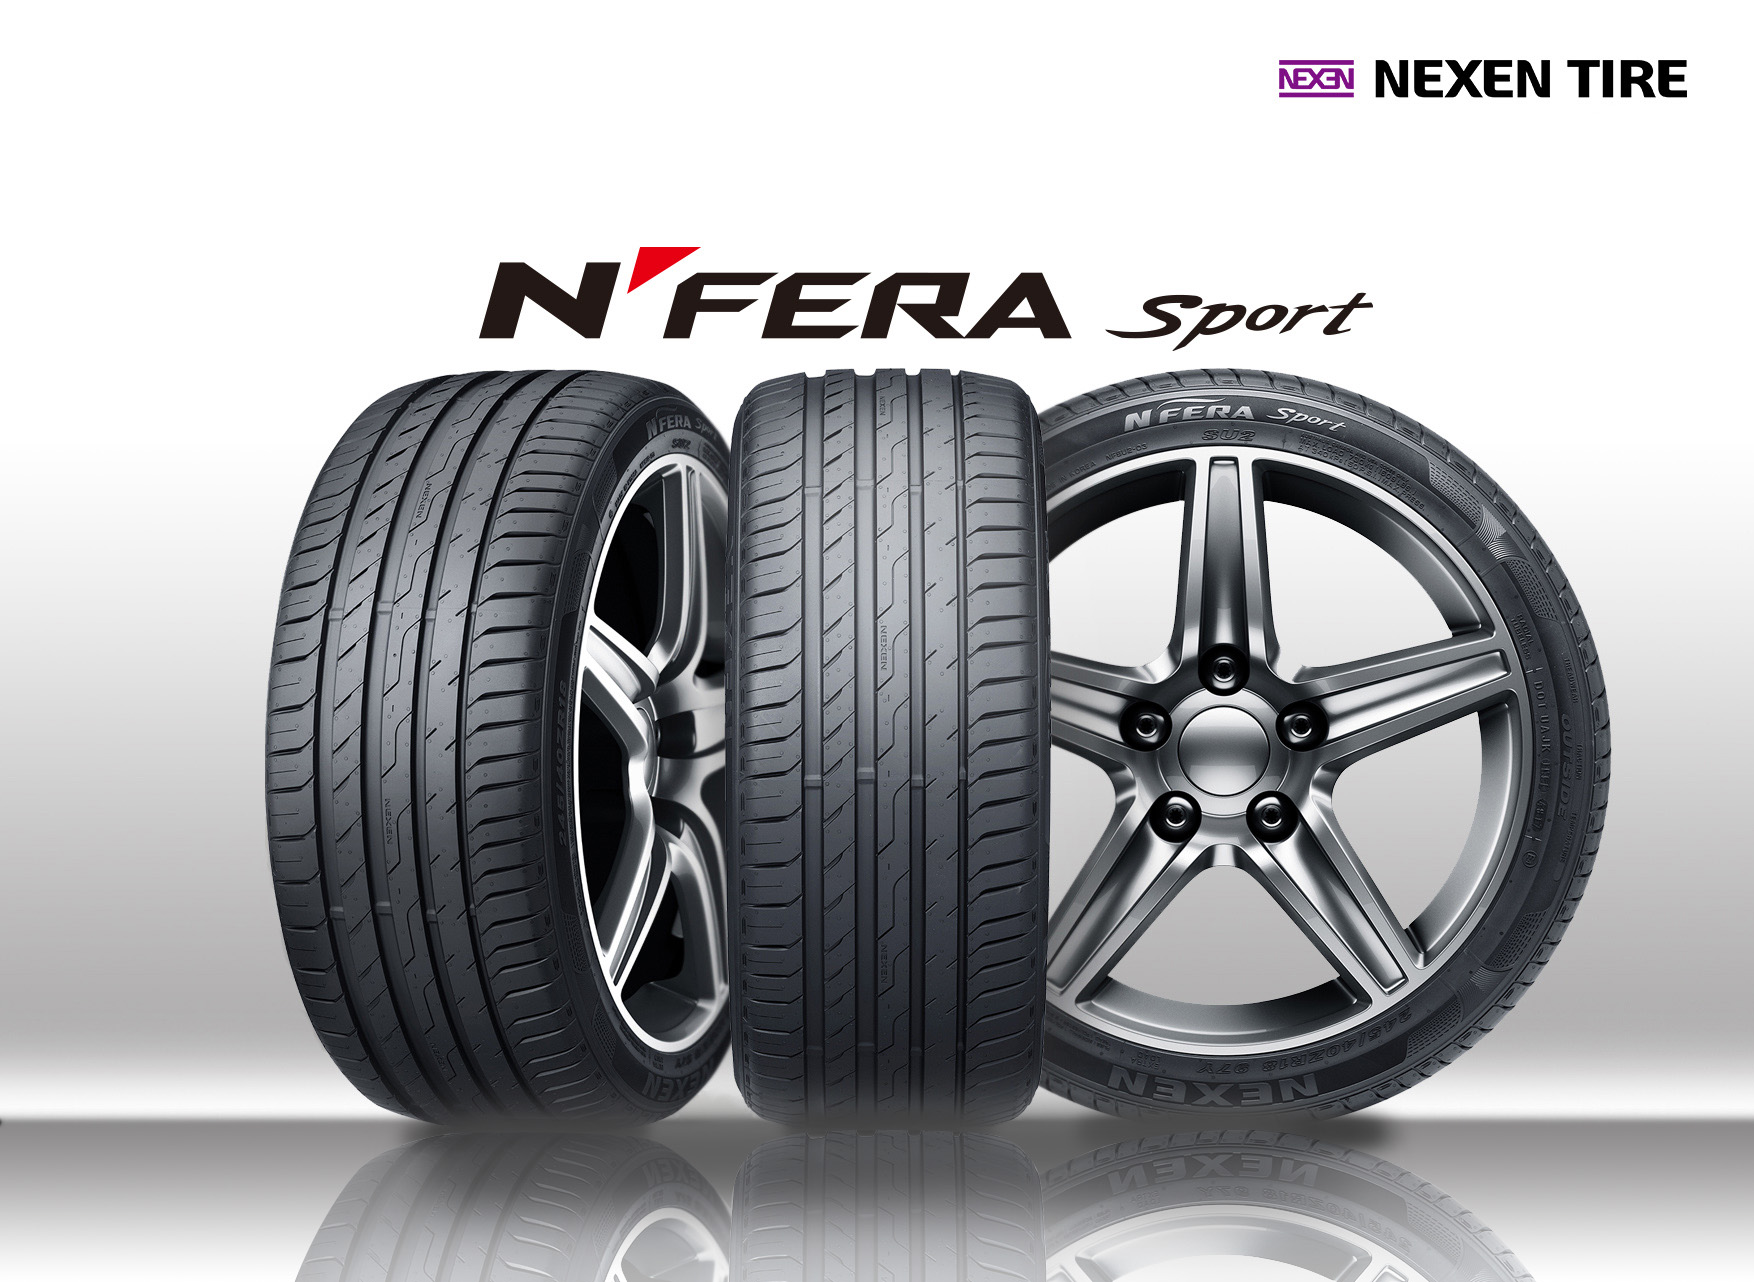 NEXEN Tire expands its original equipment portfolio line for premium quality N’FERA SPORT tires